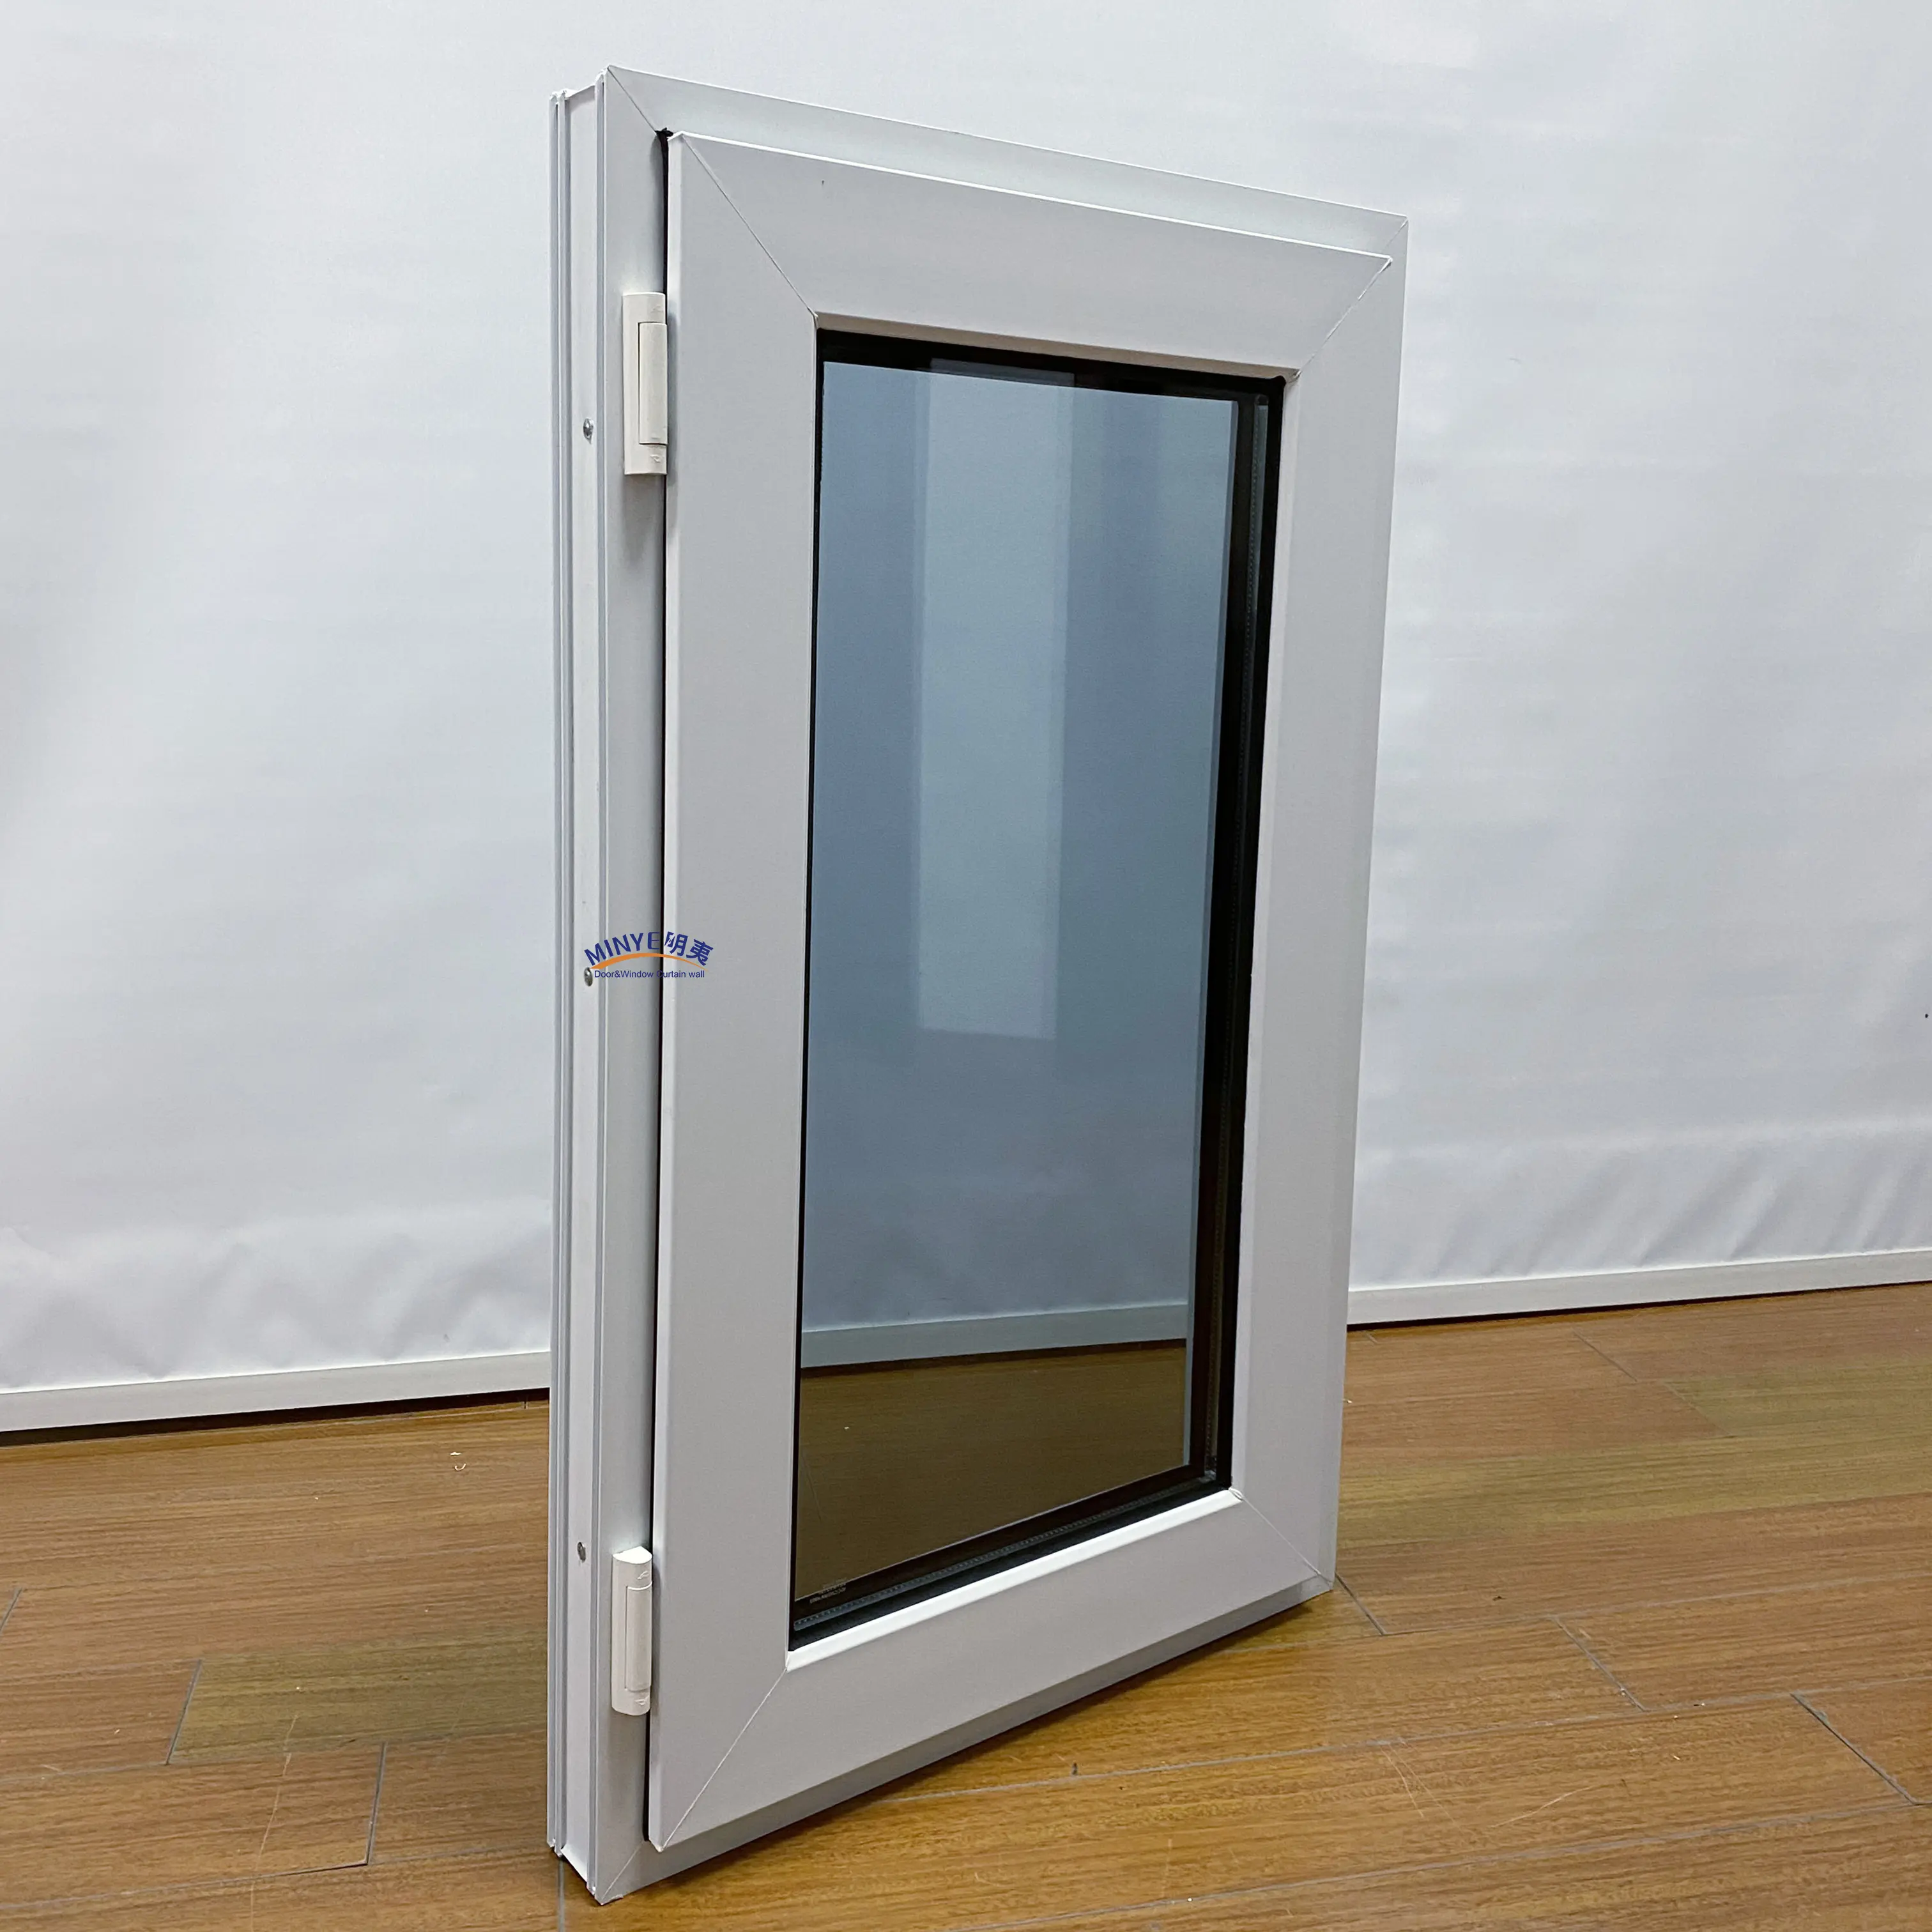 America Design Upvc Windows Doble acristalamiento Swing Pvc Ventana abatible ventanas de vinilo